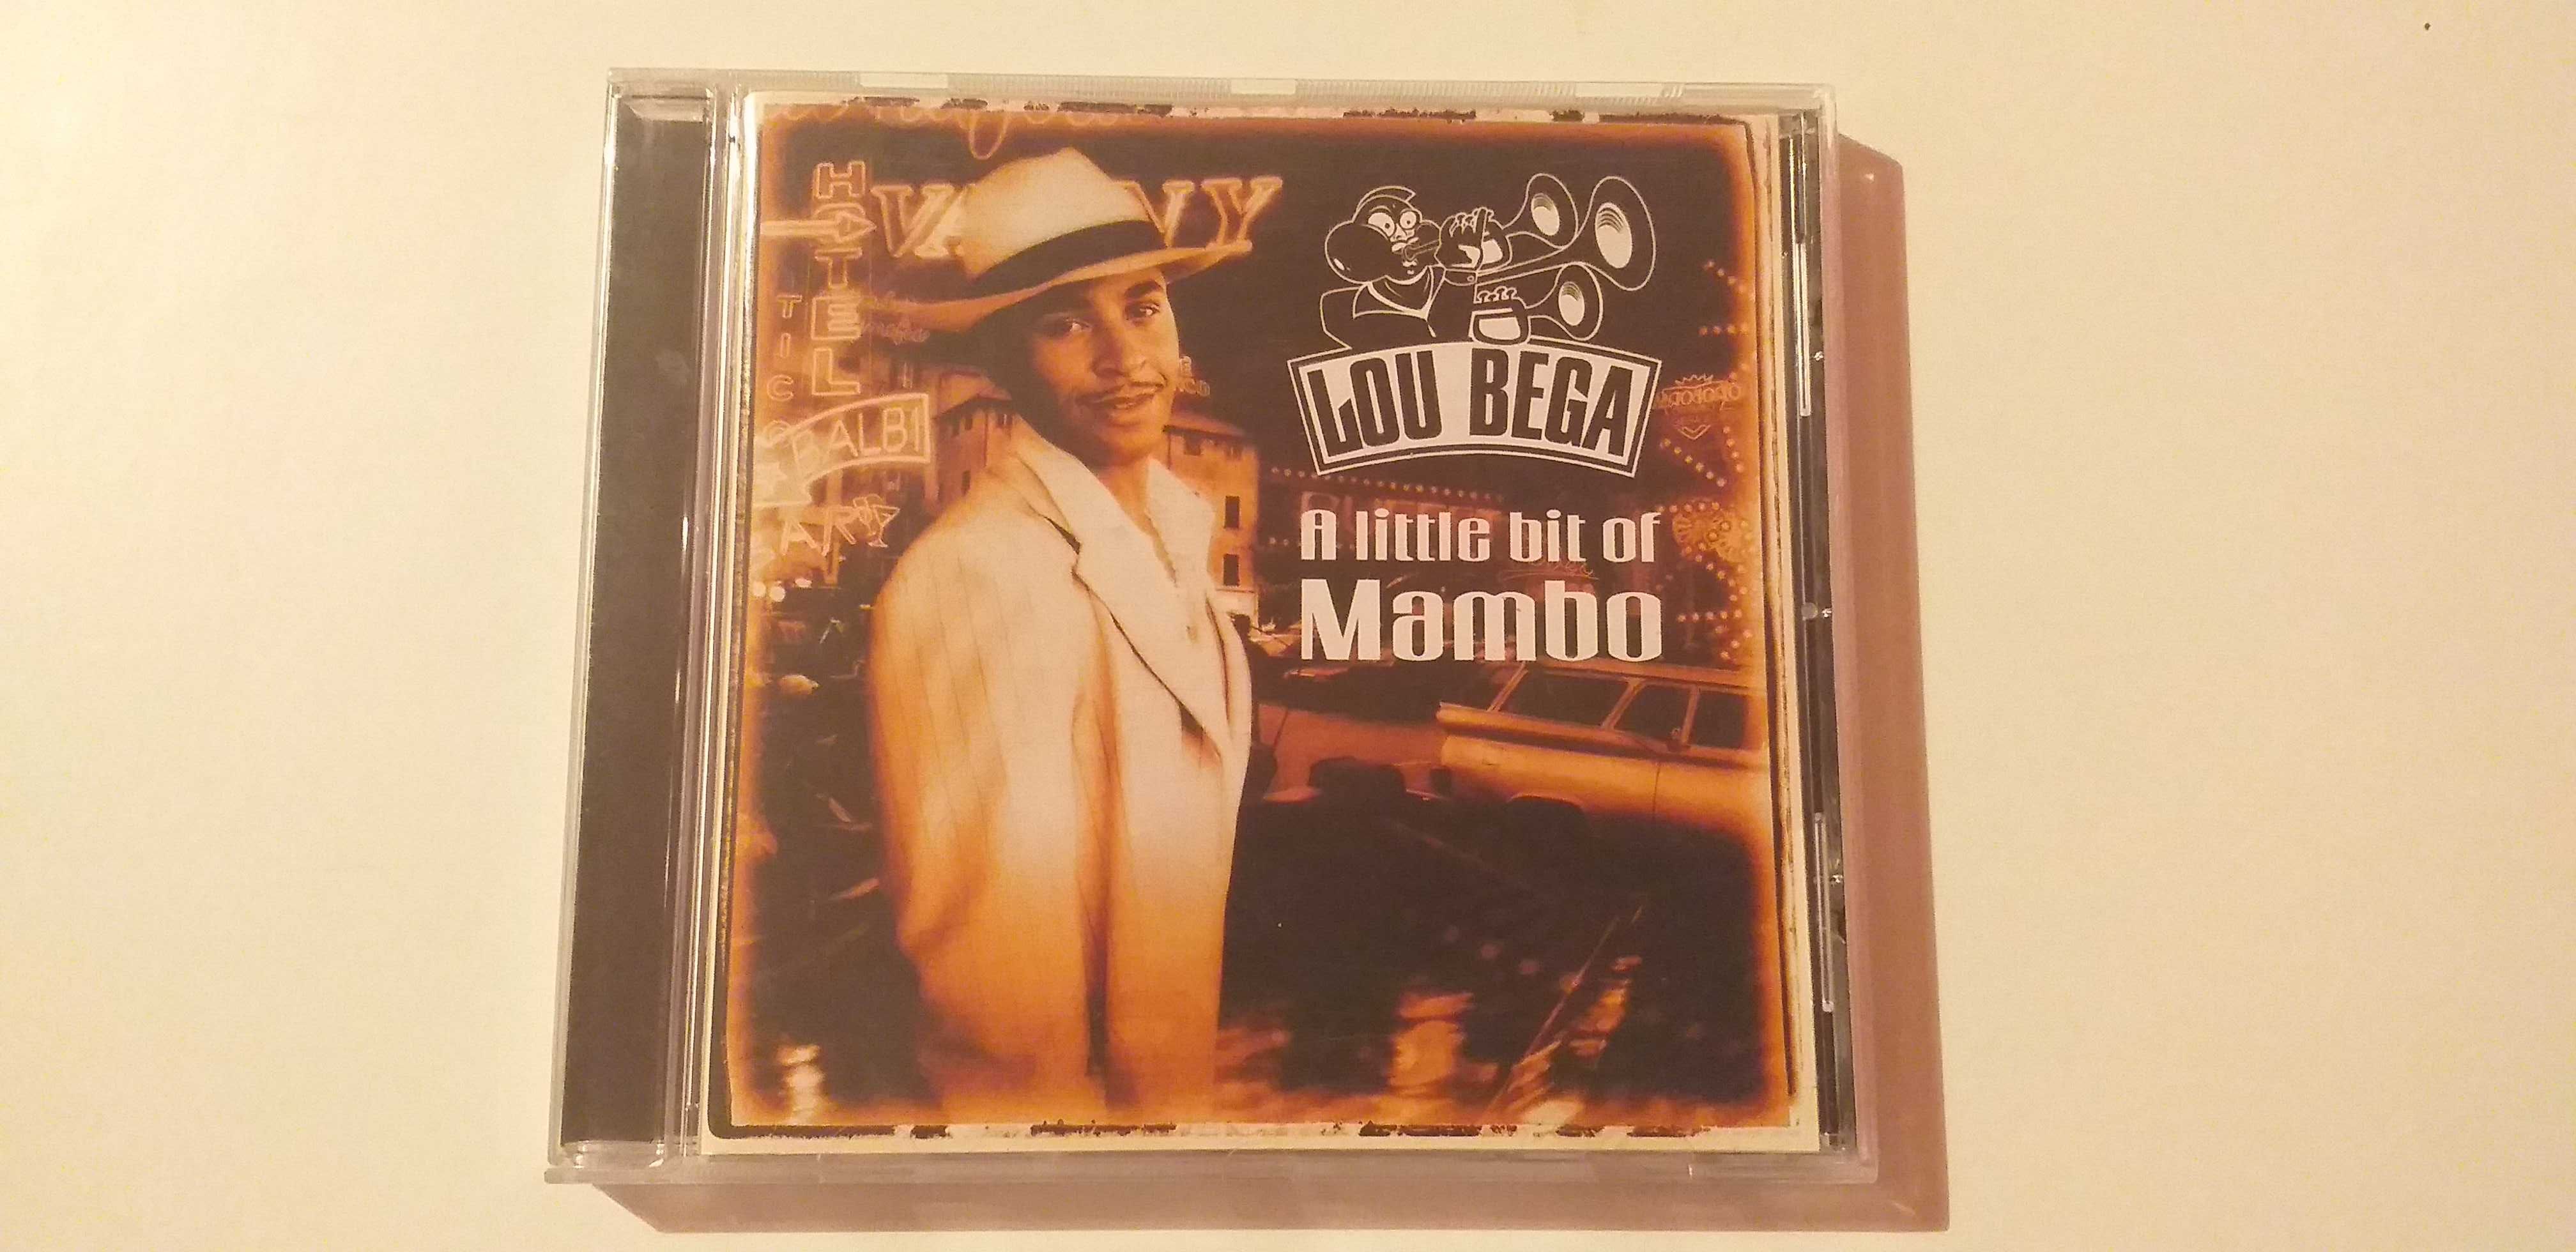 Lou Bega - " A little bit of Mambo " - CD - portes incluidos